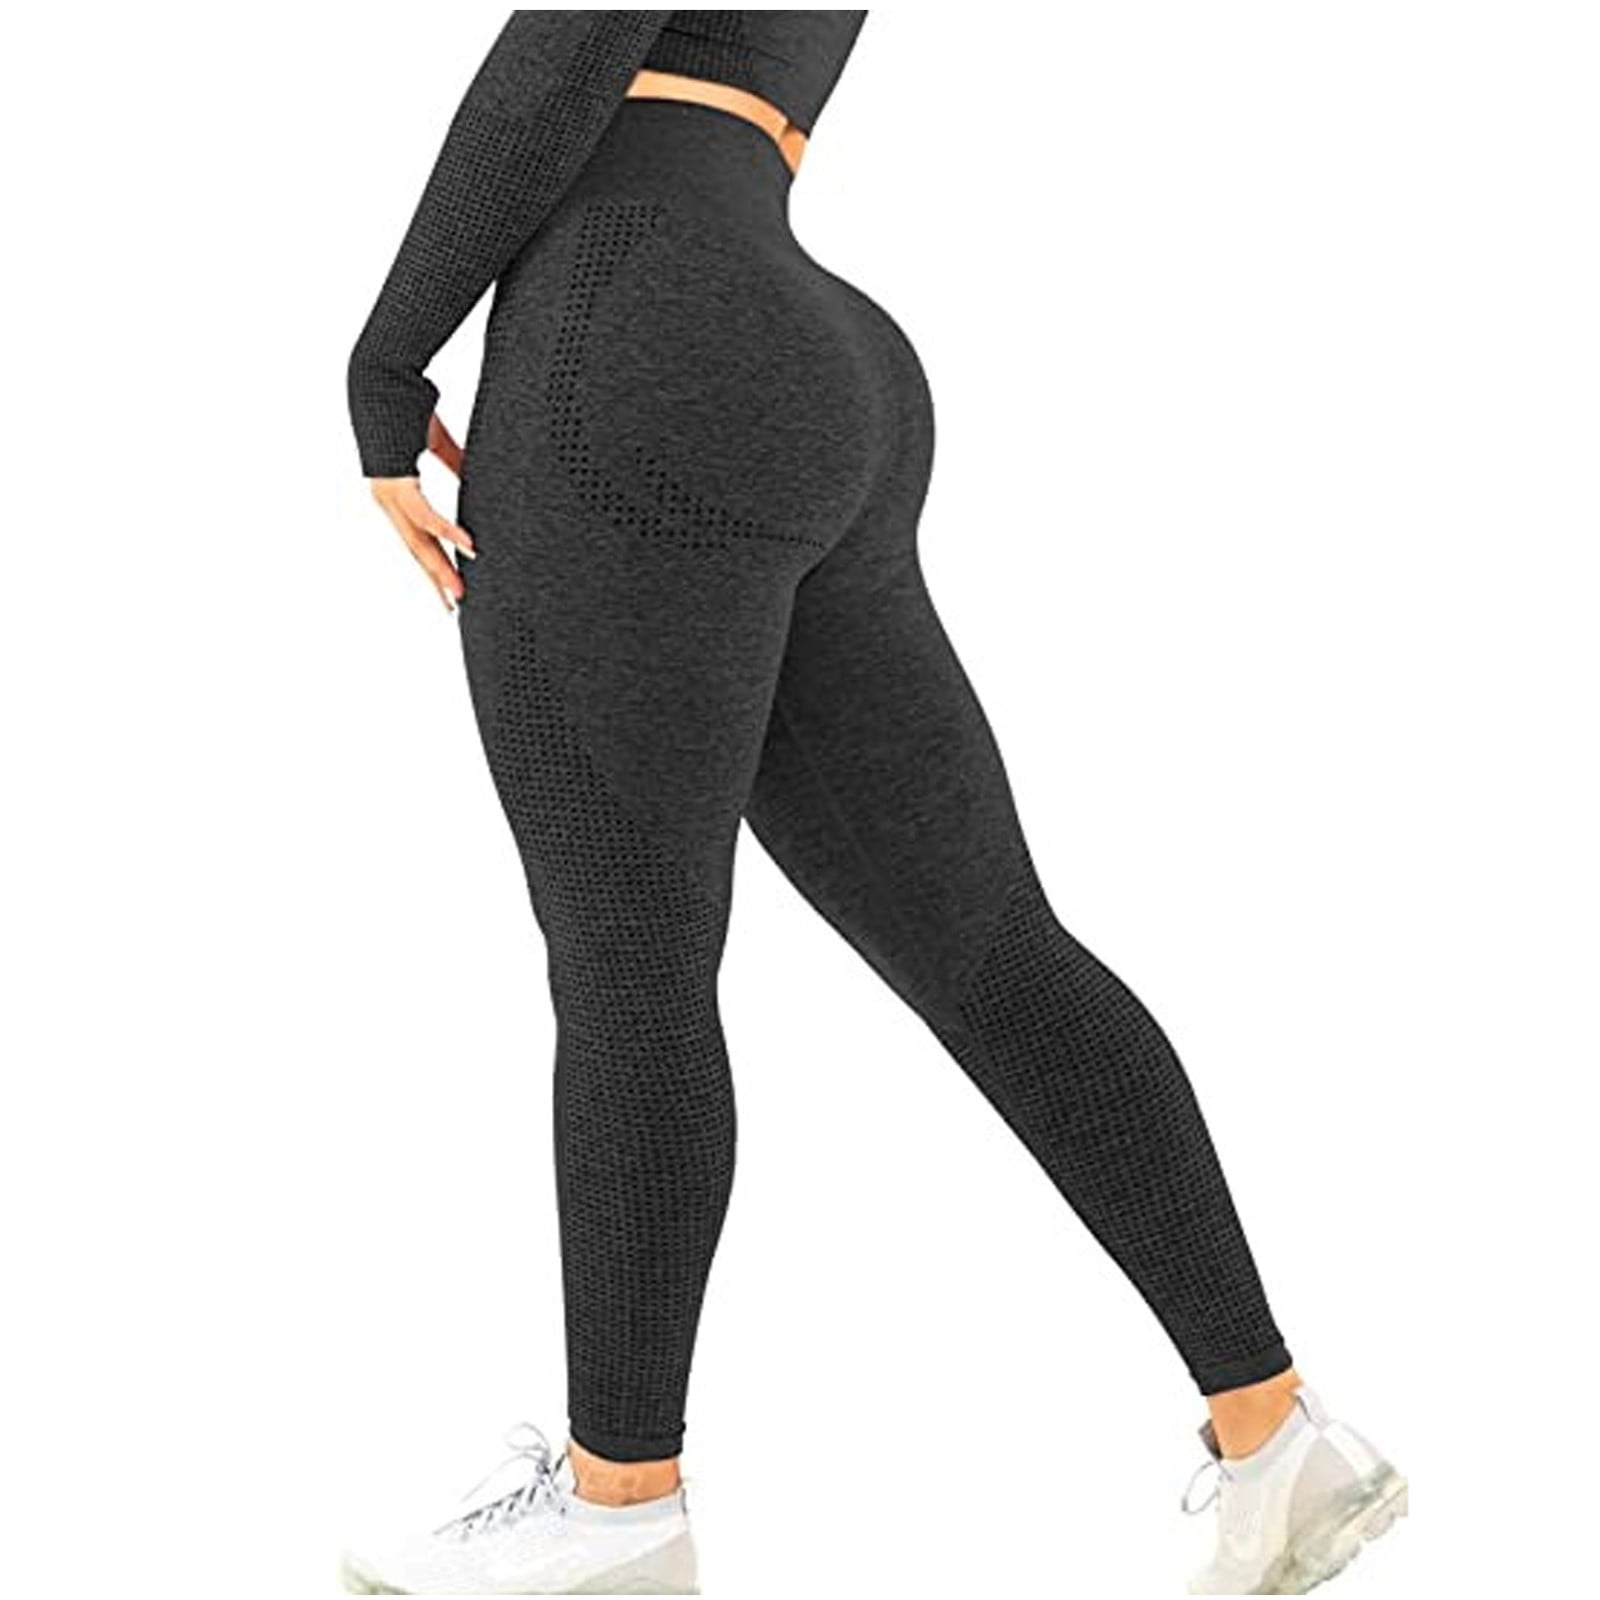 JSGEK Clearance Women s Hip Lift Athletic Leggings Seamless Jacquard Dot High Waist Quick Dry Pants Fitness Sports Yoga Pants Black L 0d854f9d 2d6c 47de 8344 2391191ee007.72bad88ed78700f1337857f853f6dc18